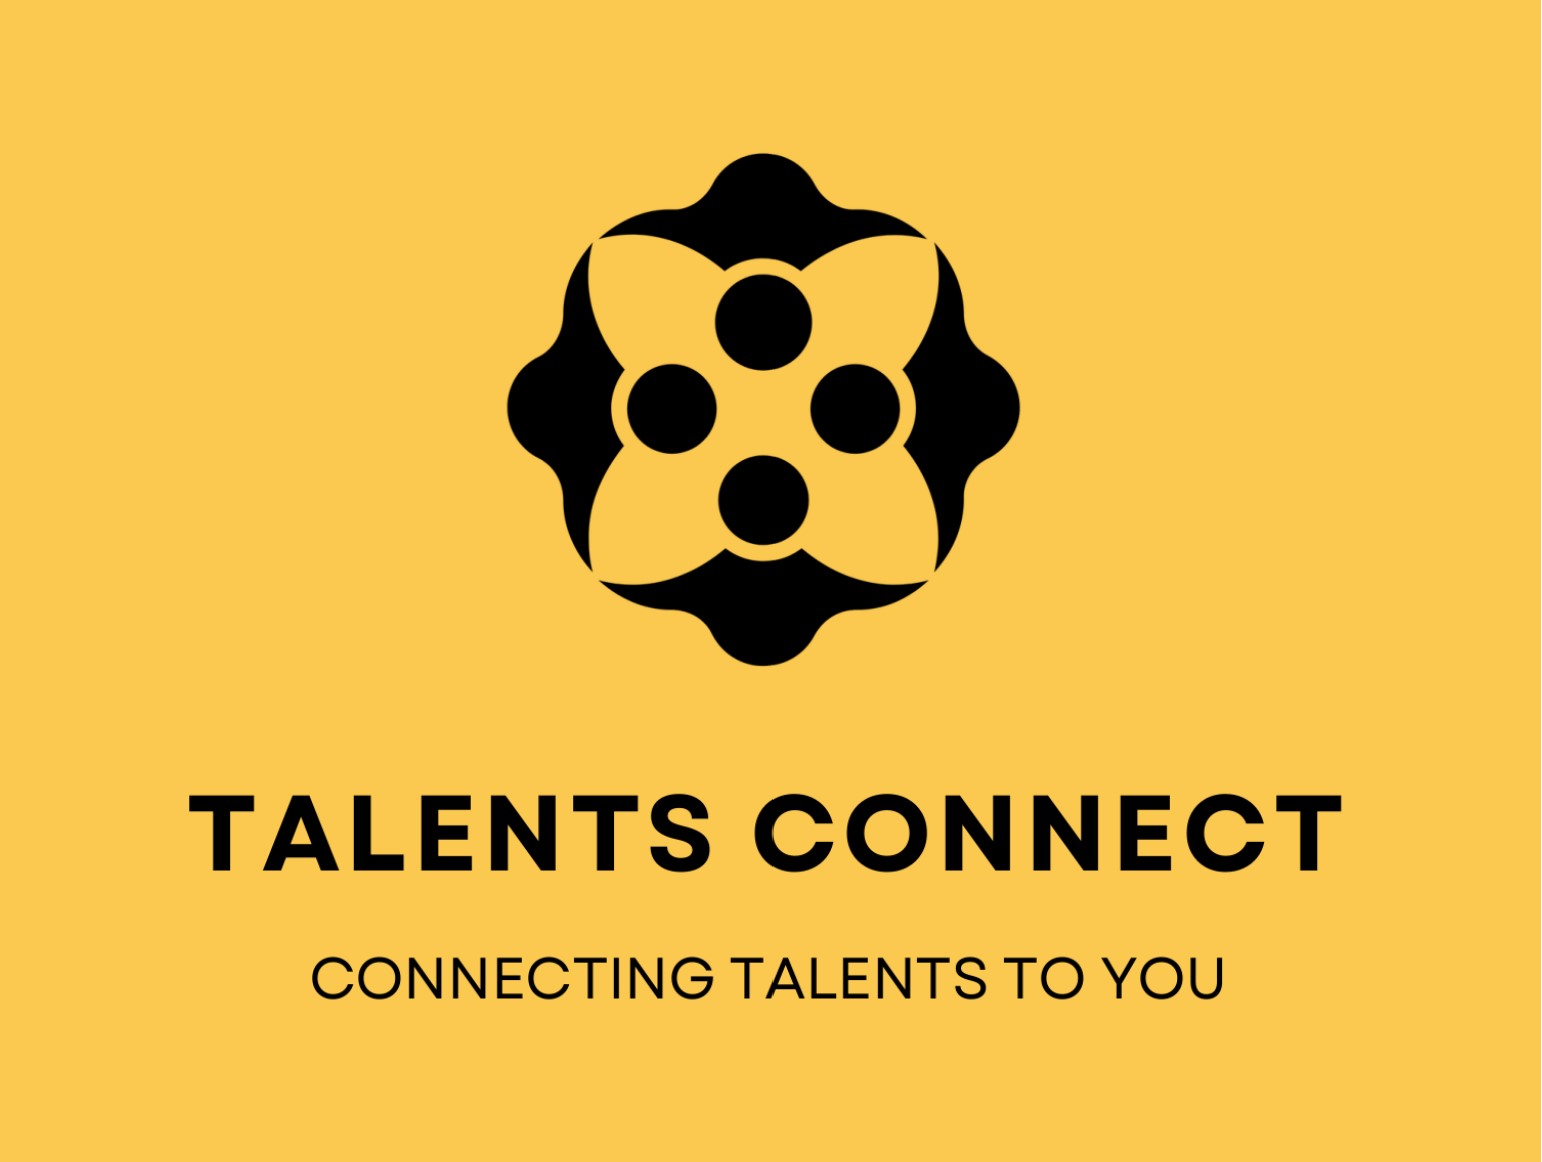 Talents Connect company logo